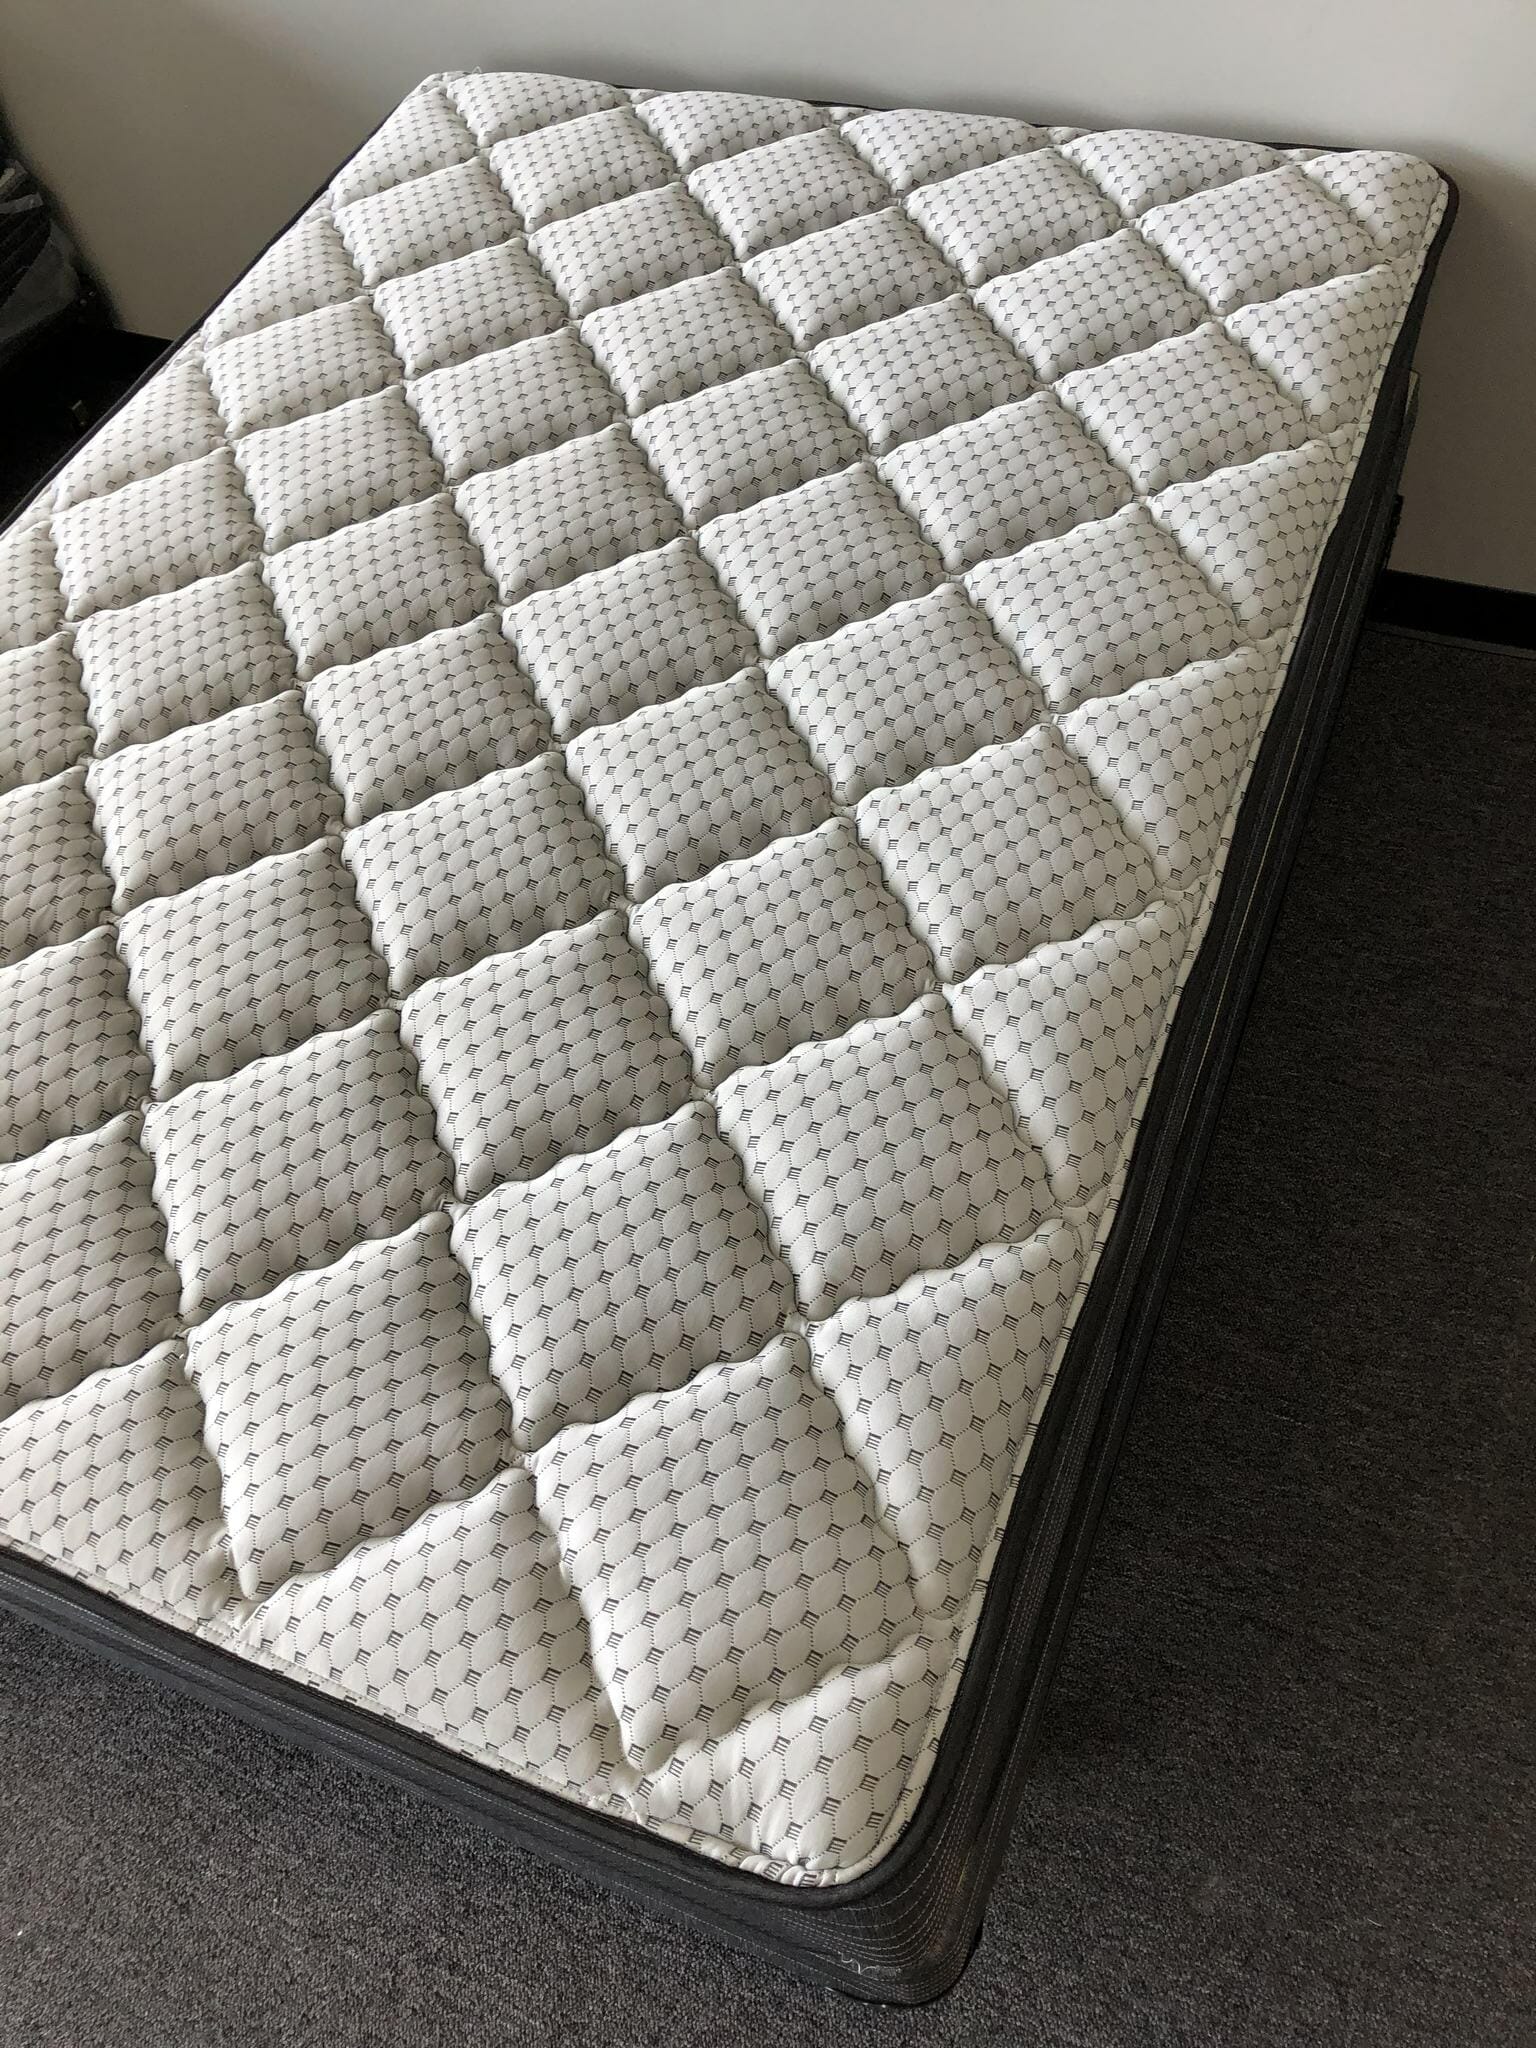 cheap mattress outlet near me